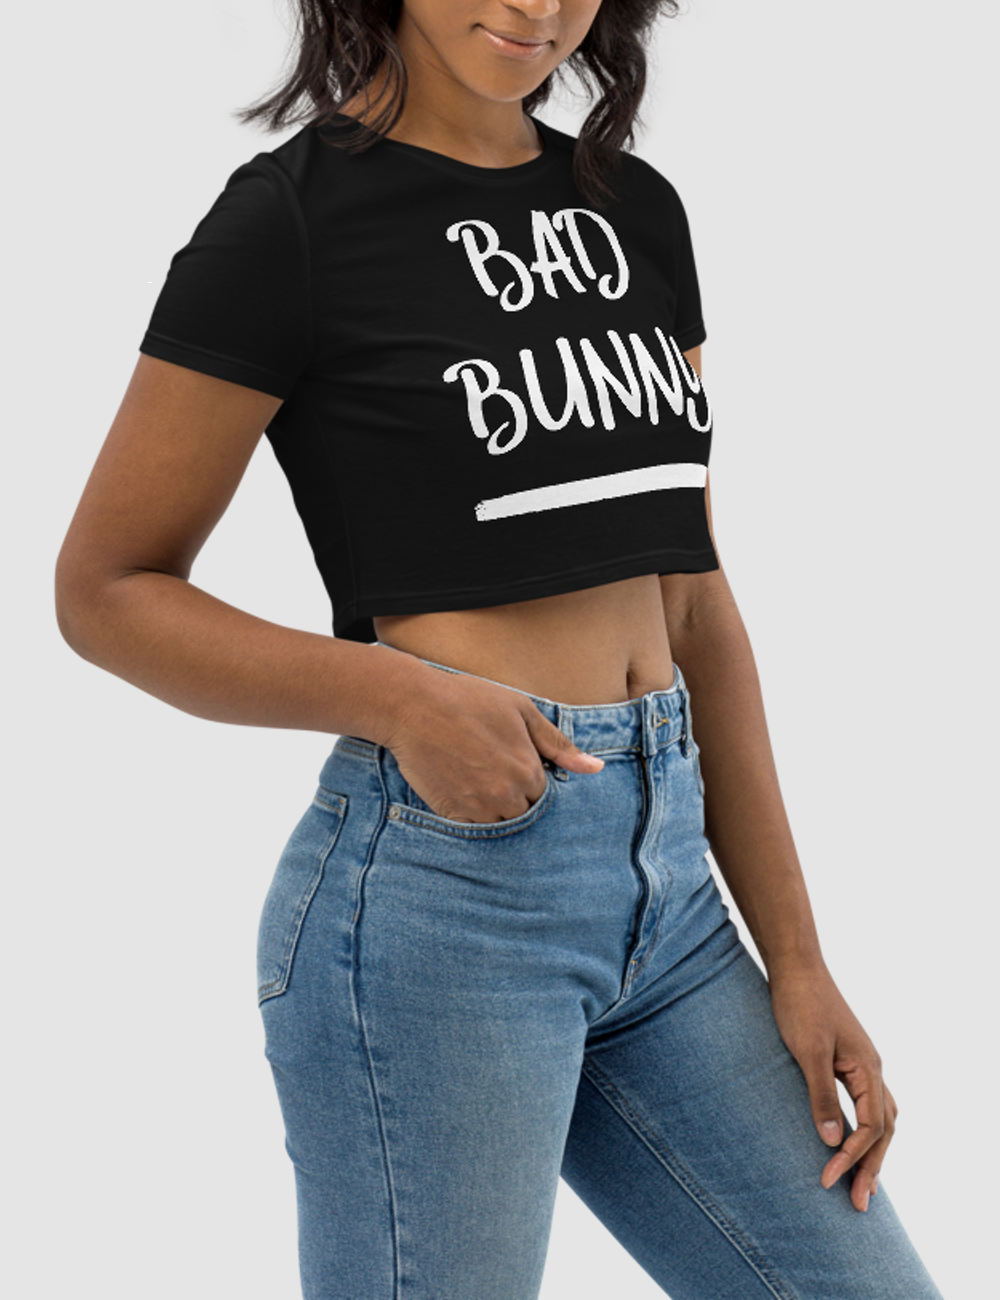 Bad Bunny | Women's Crop Top T-Shirt OniTakai